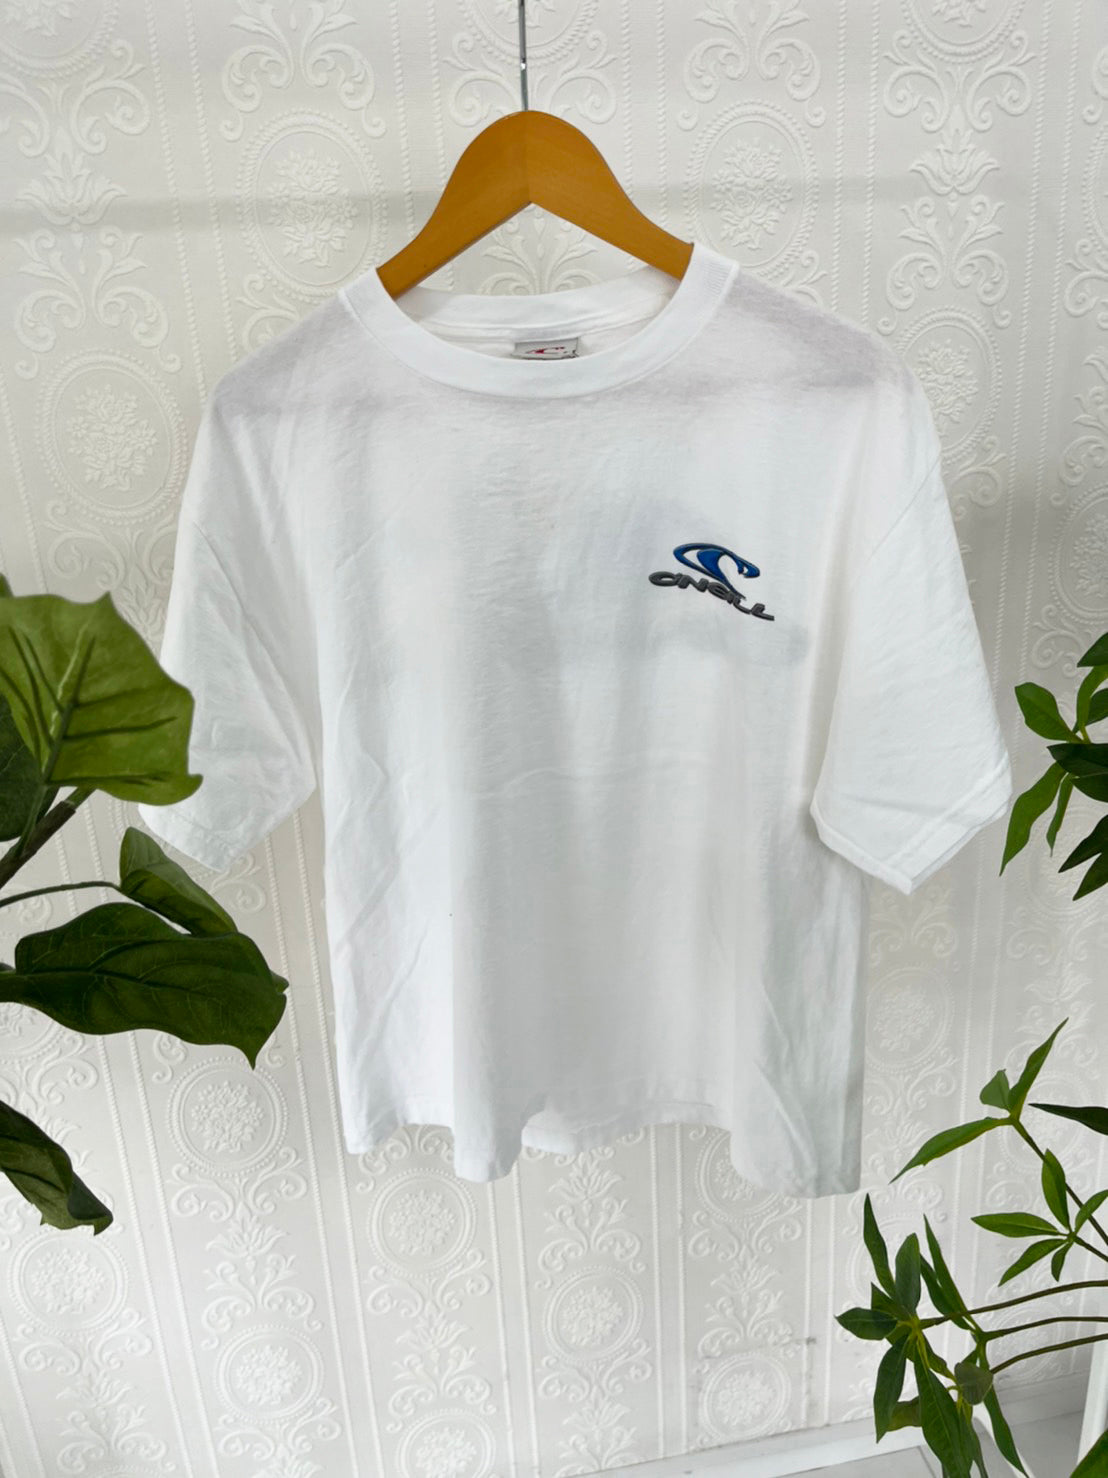 【DeadStock onewash】 90's O'NEILL Simple Big Logo T-shirt  (men's M)